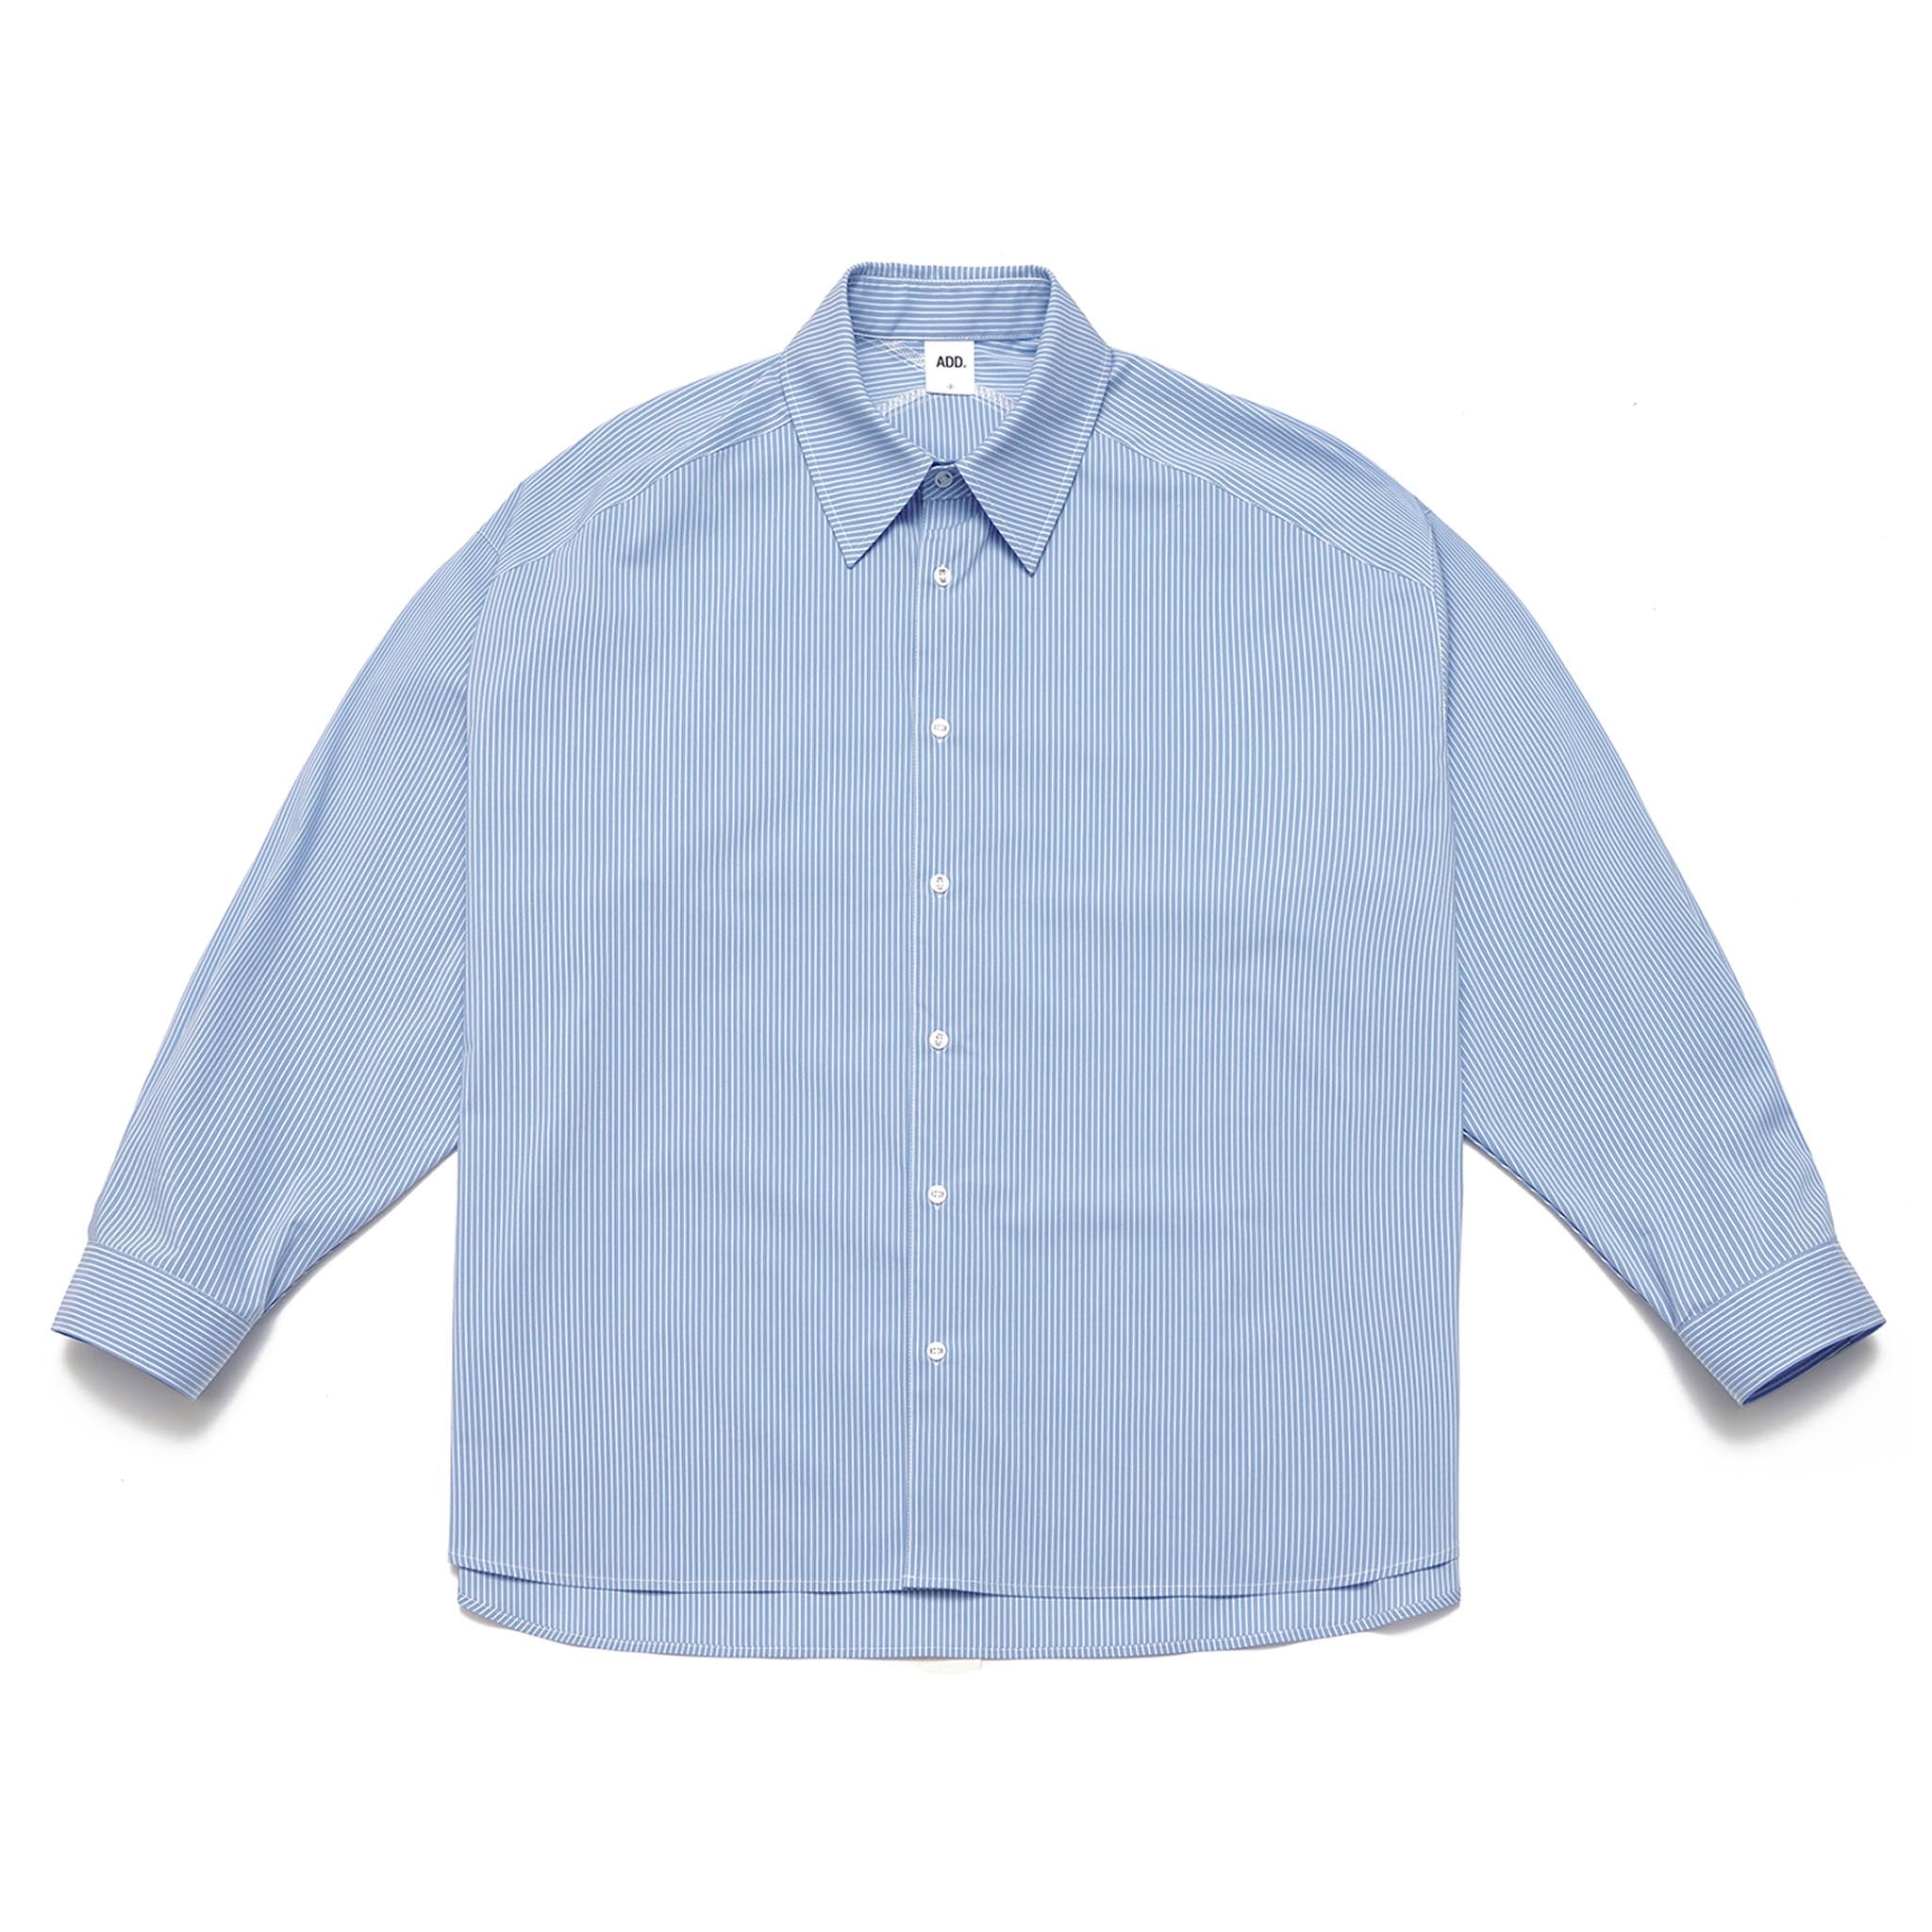 ADD Cutout Stripe Avantgarde Shirt Blue